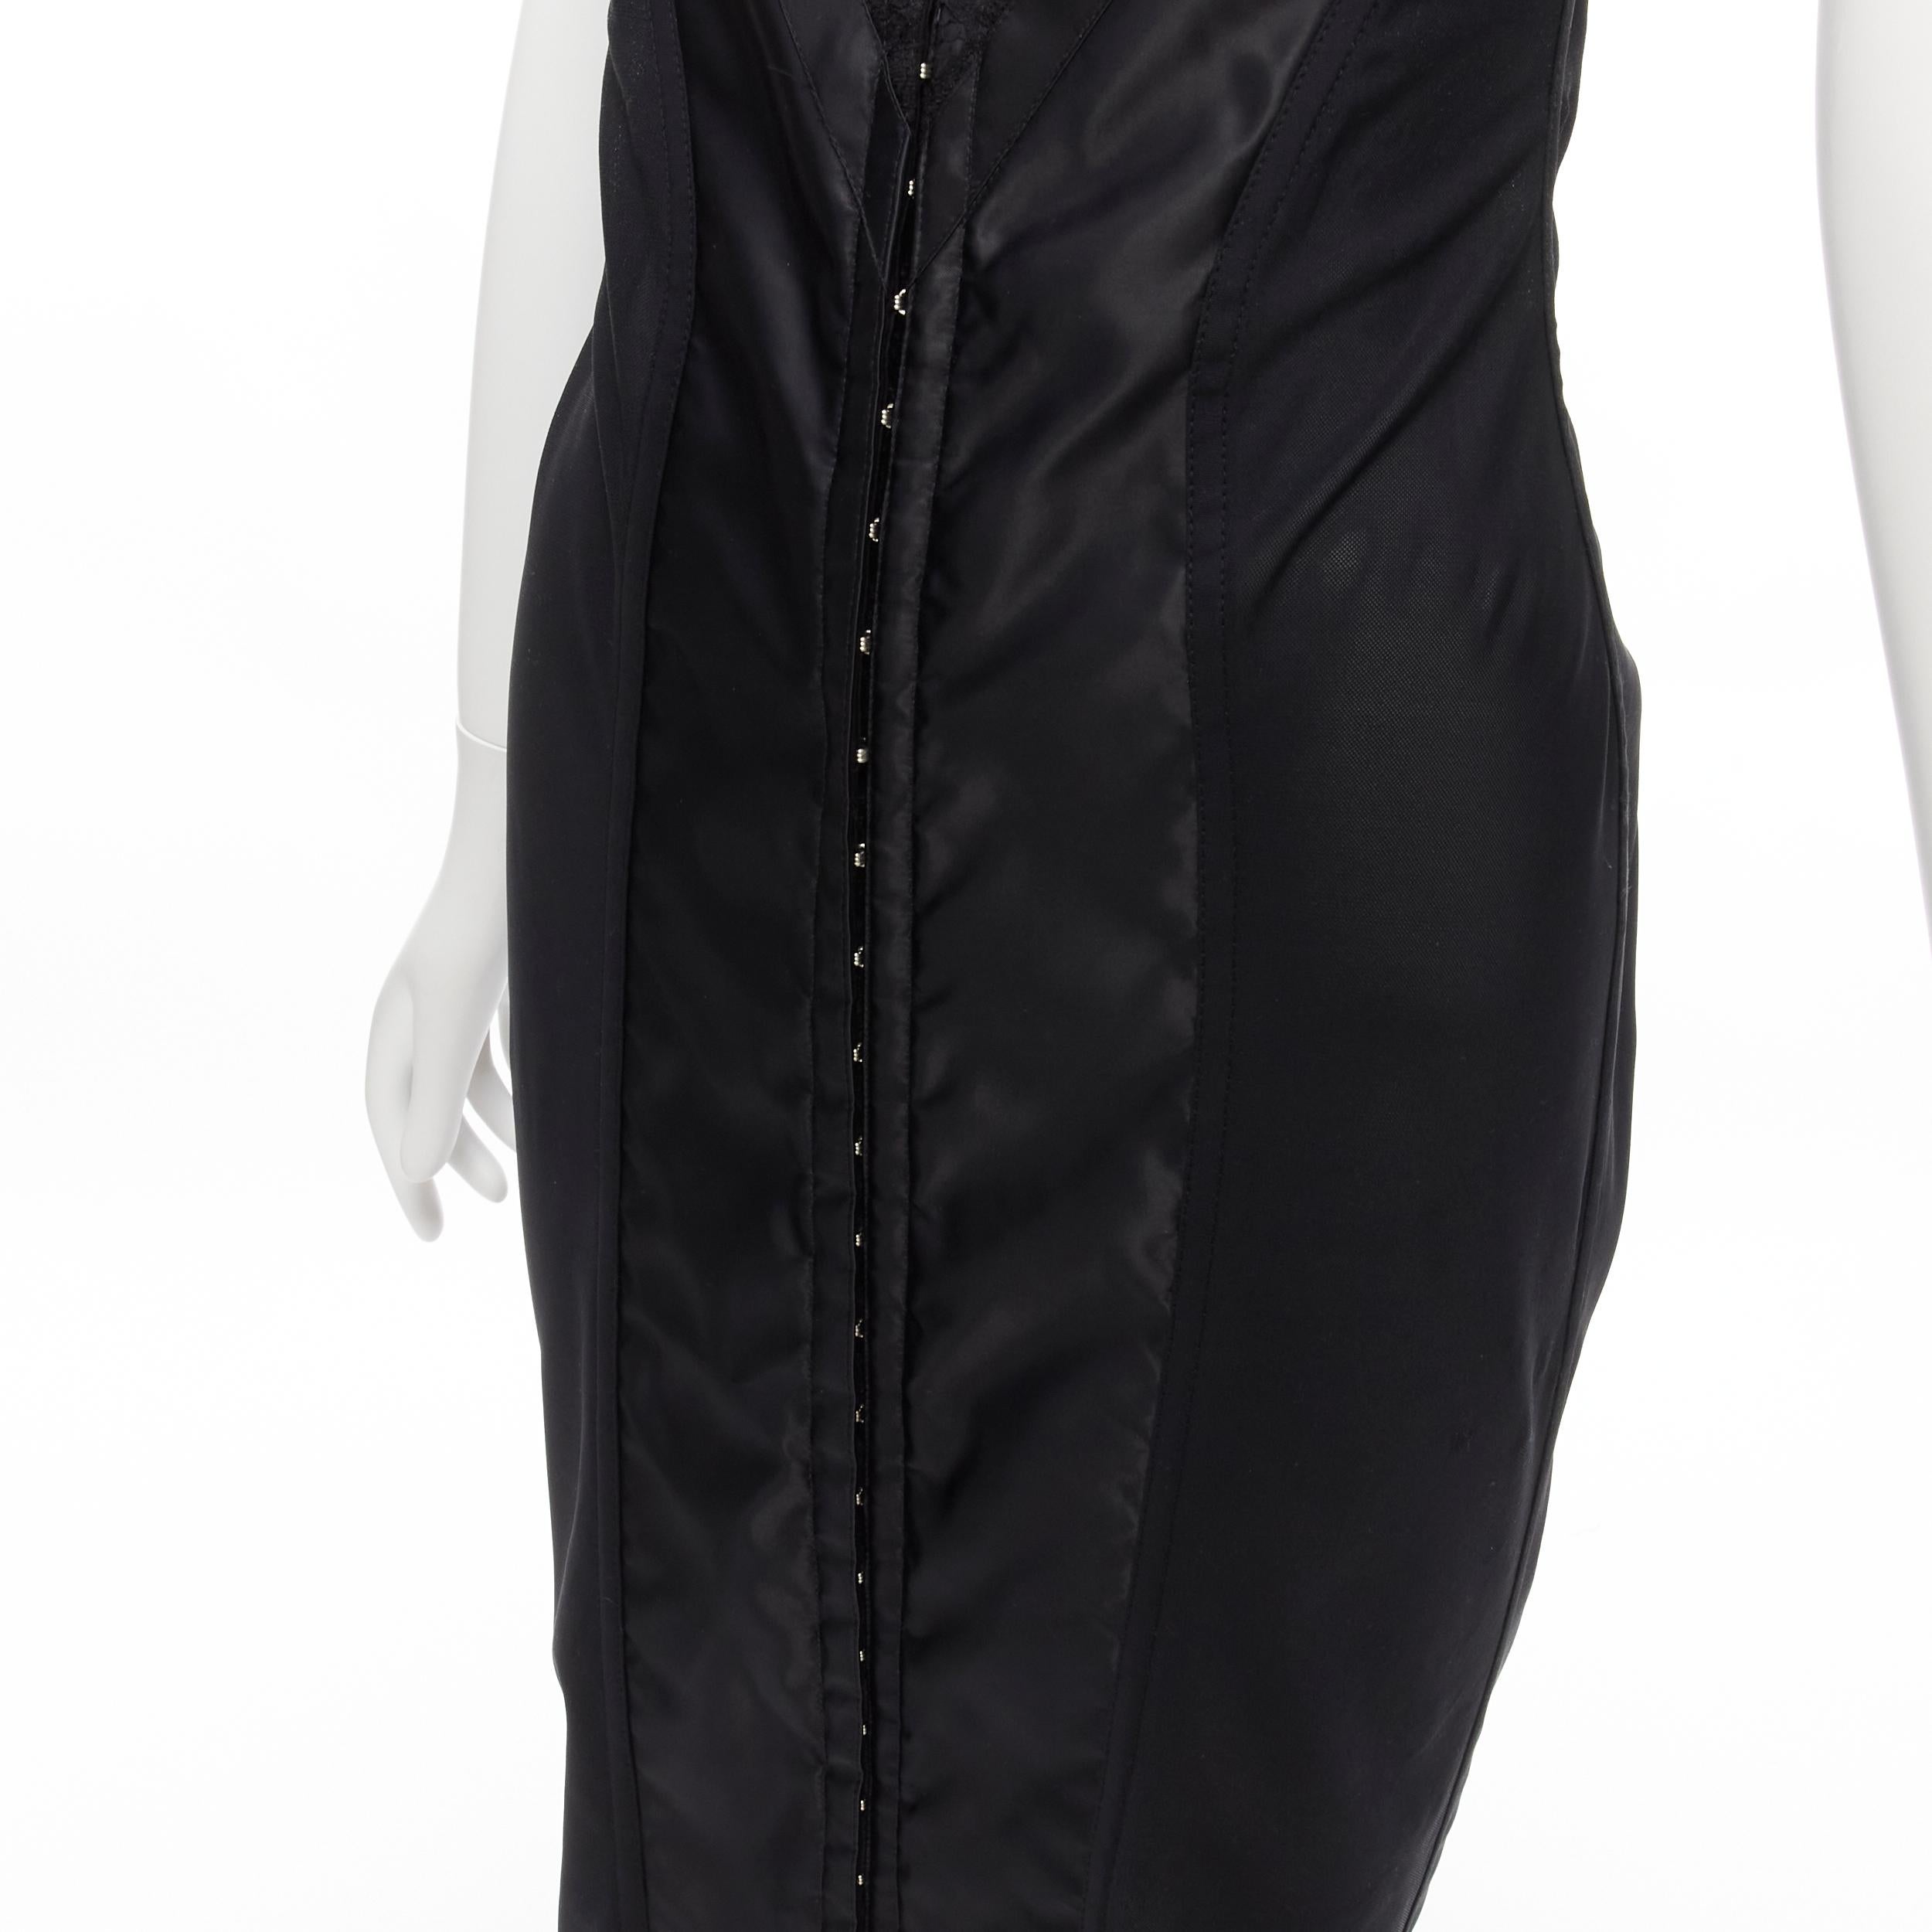 DOLCE GABBANA black lace bustier boned corset cocktail dress IT38 XS For Sale 2